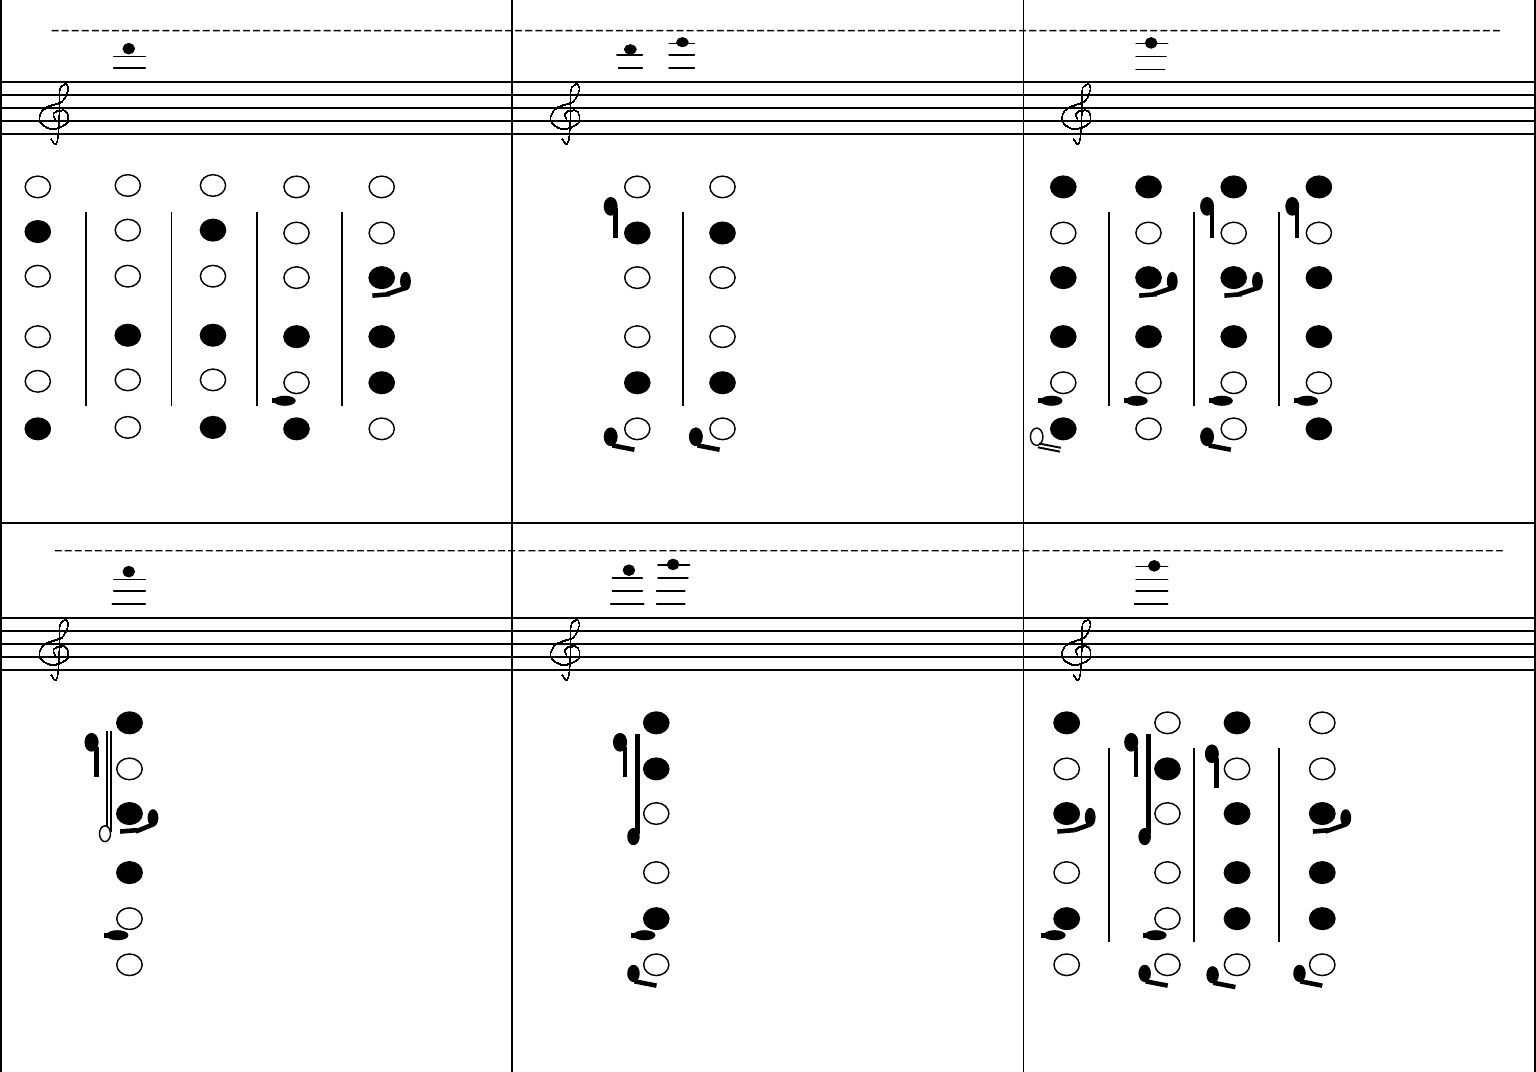 French 5-Key Flute Fingering Chart